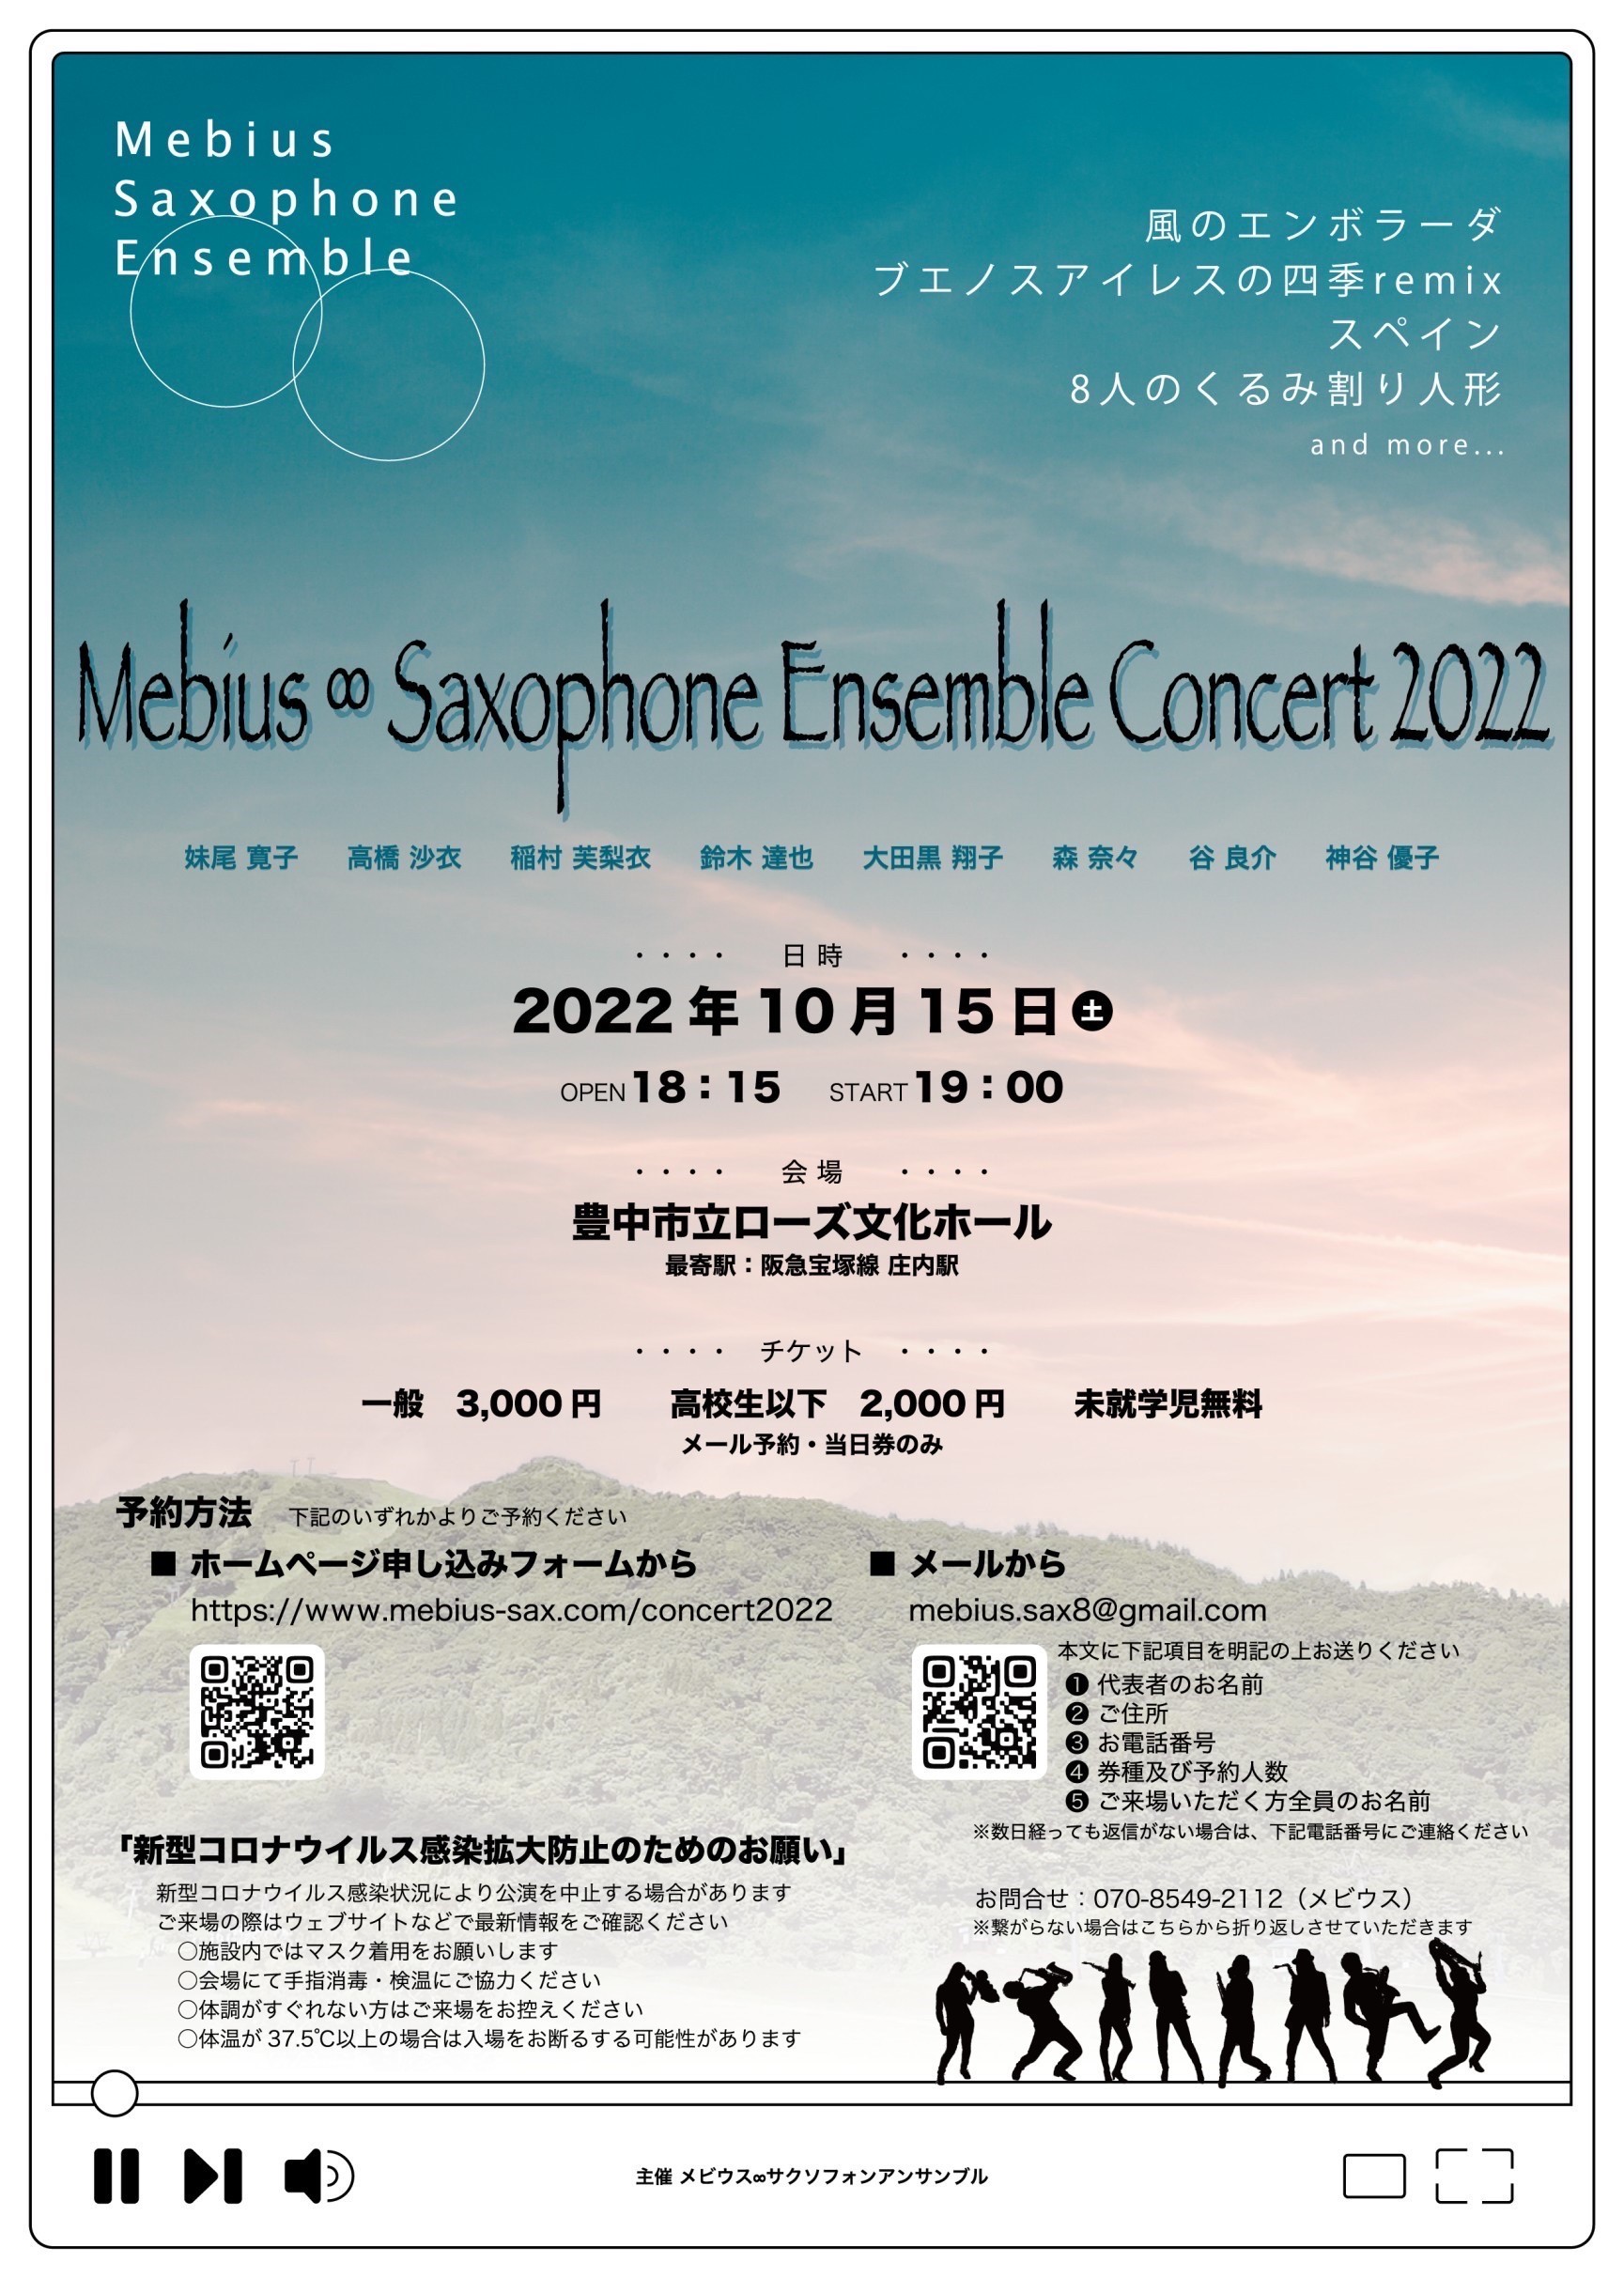 Mebius ∞ Saxphone Ensemble Concert 2022